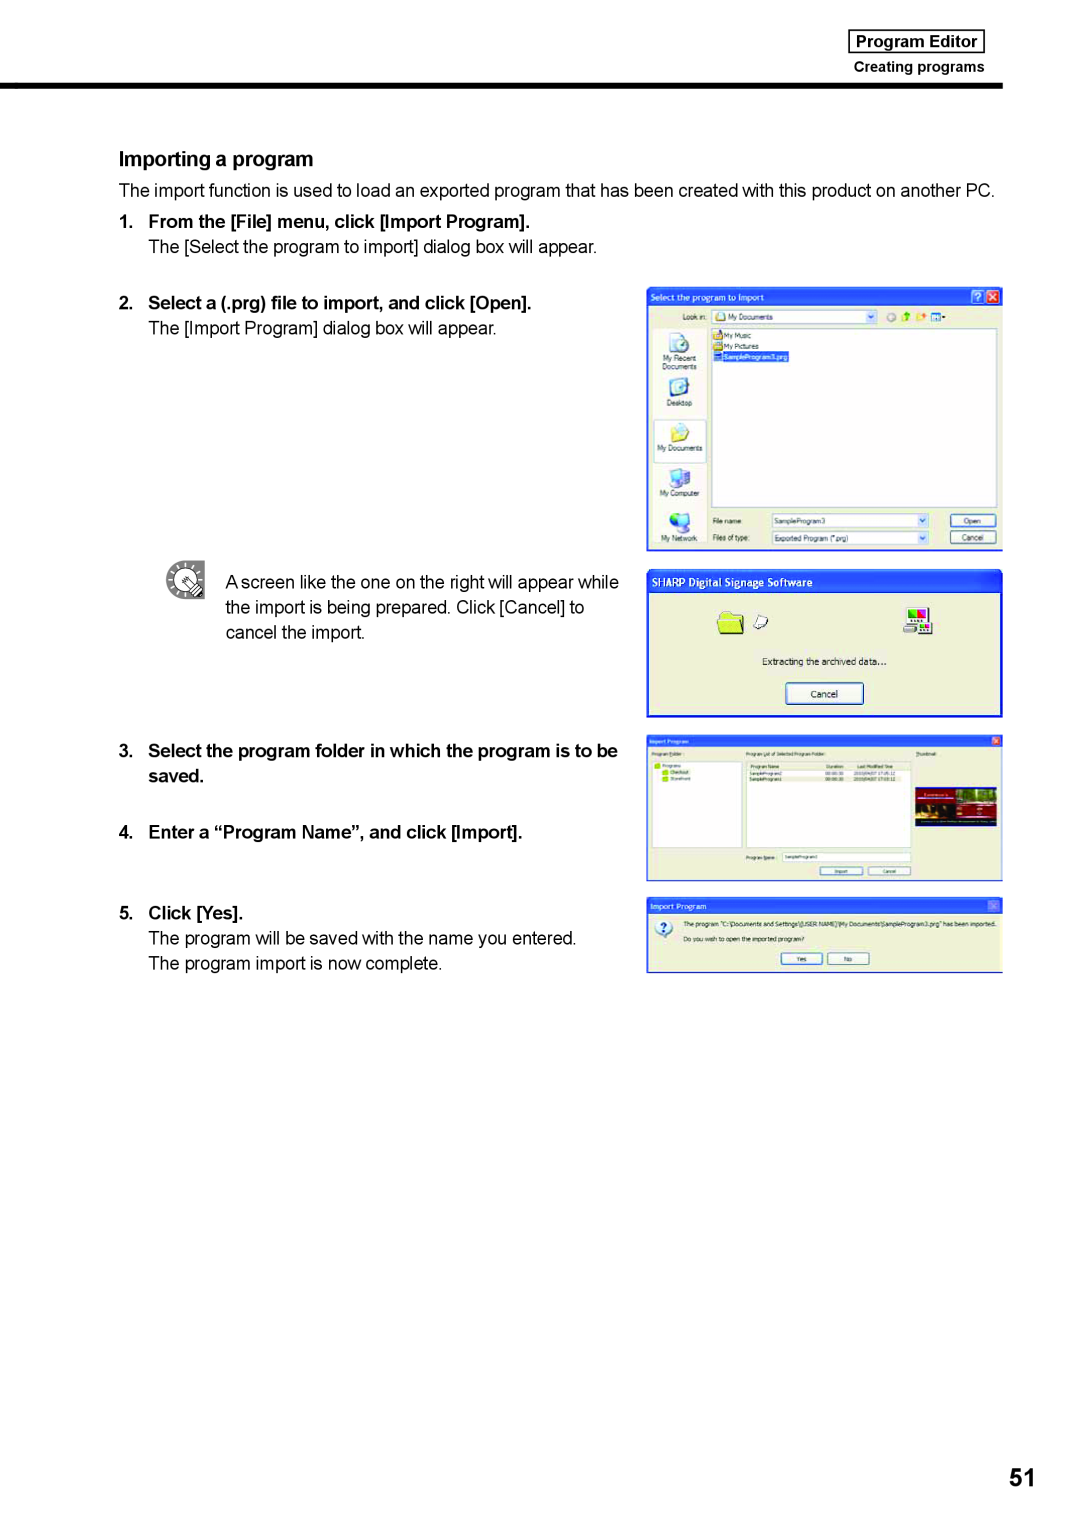 Sharp PNSV01 operation manual Importing a program, From the File menu, click Import Program 